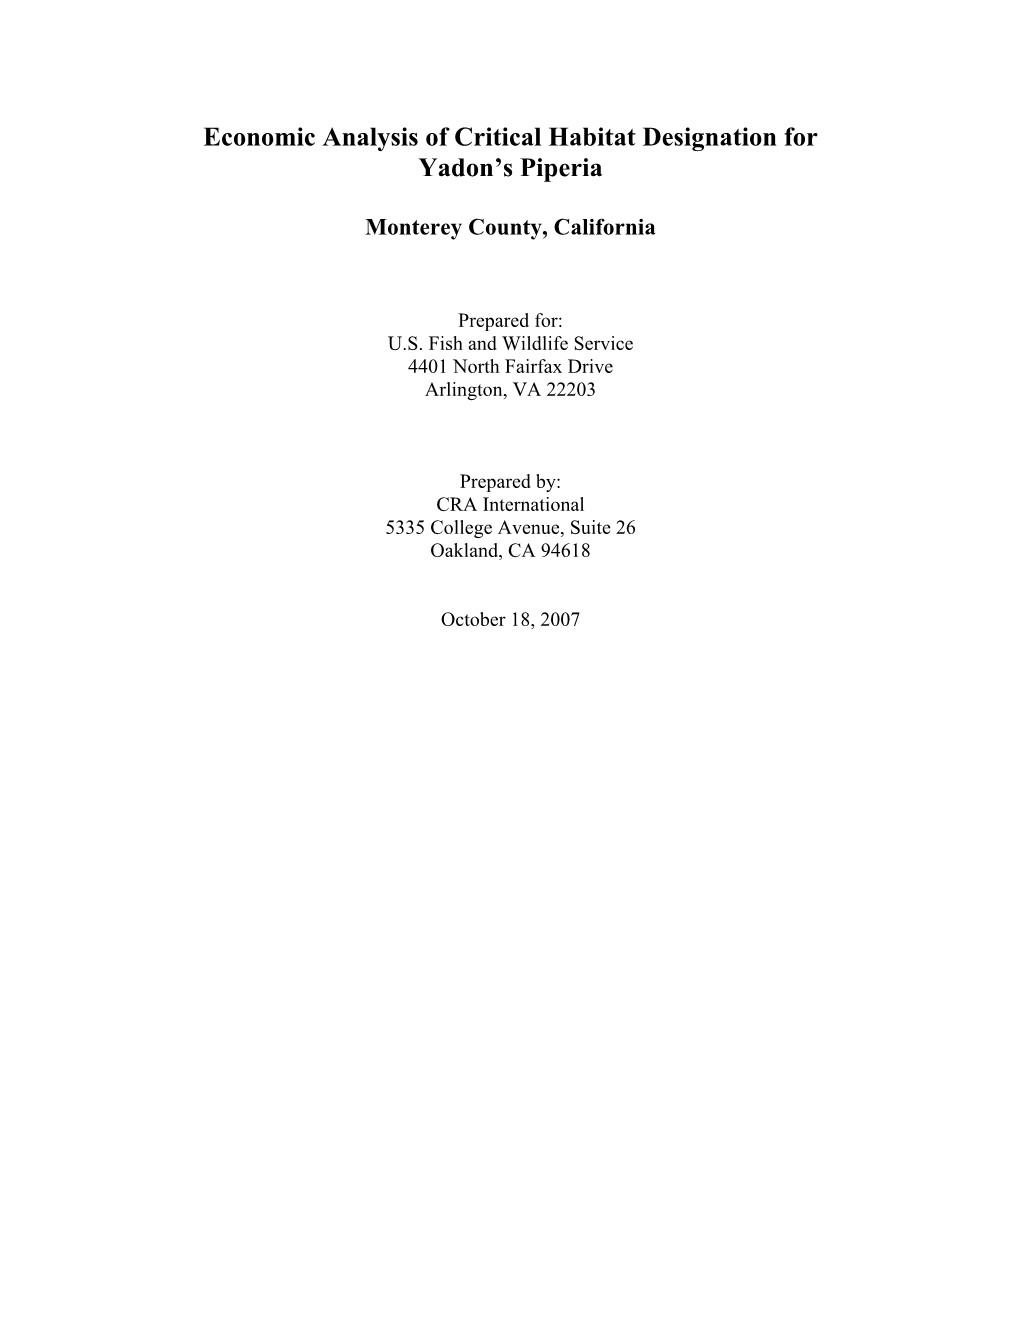 Economic Analysis of Critical Habitat Designation for Yadon's Piperia